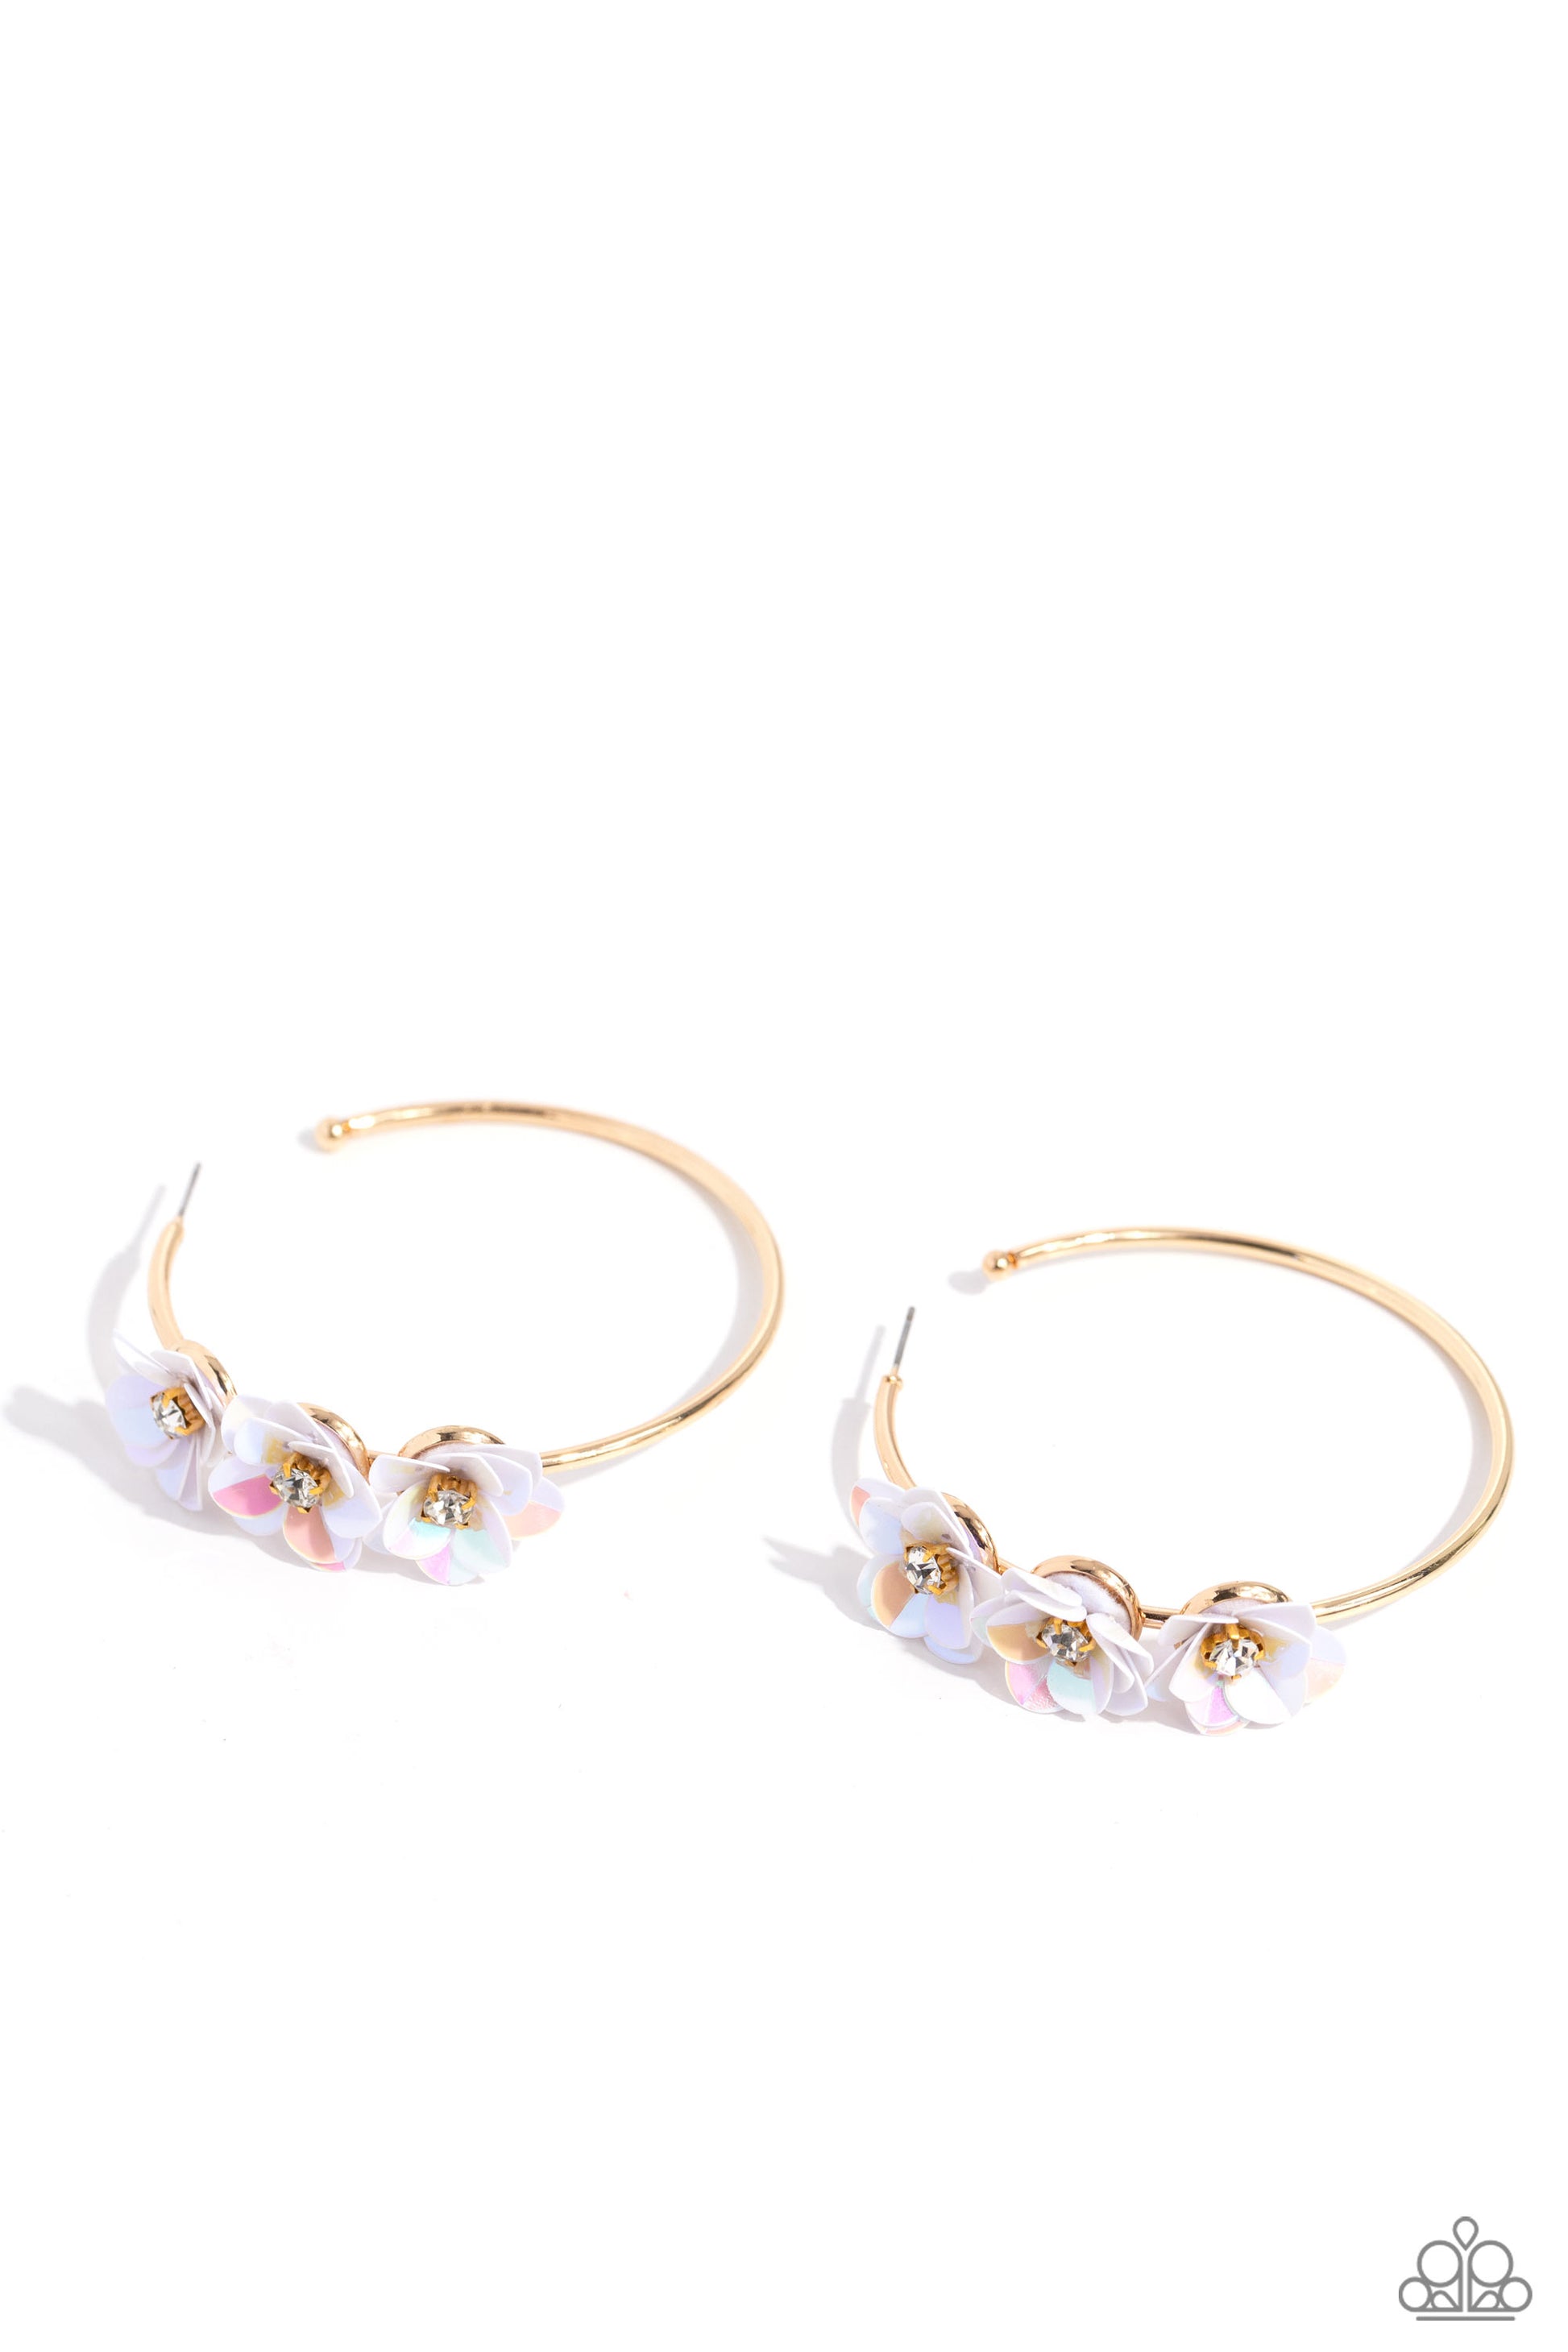 Ethereal Embellishment - gold - Paparazzi earrings